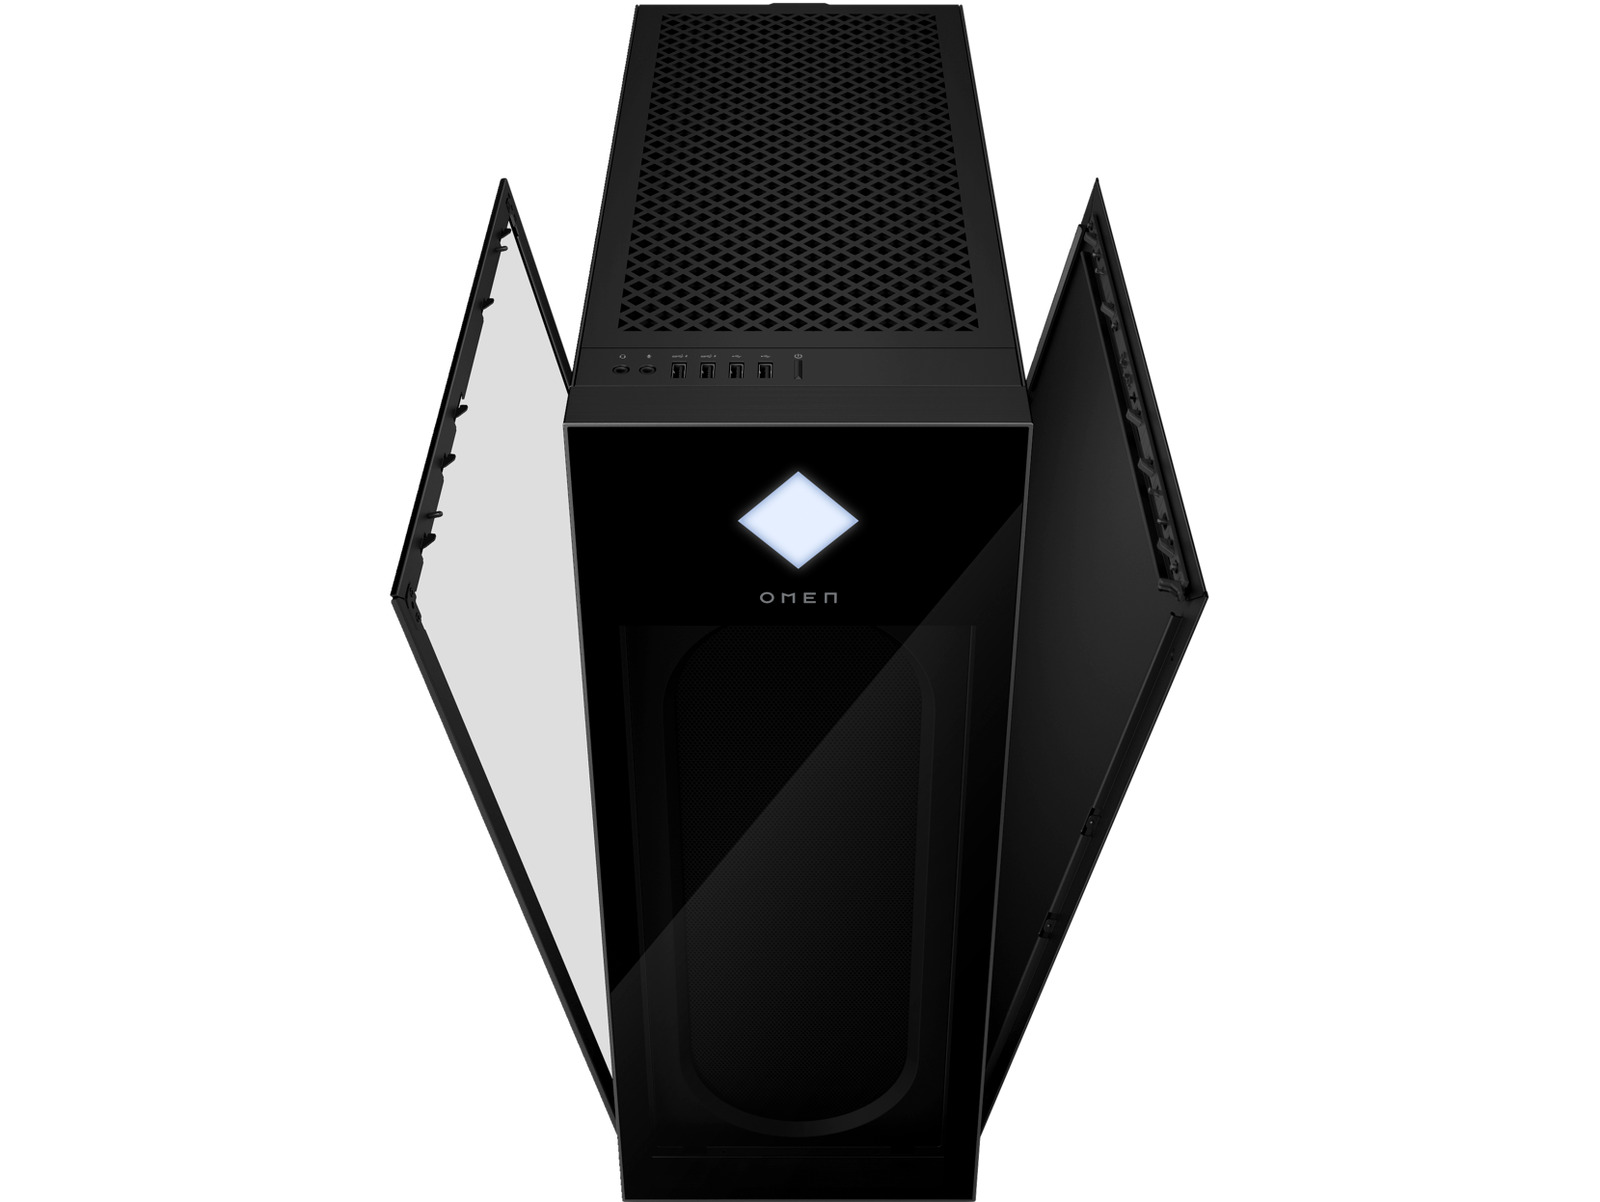 HP OMEN 45L ATX Gaming Desktop PC Case - Brand New Complete In Box